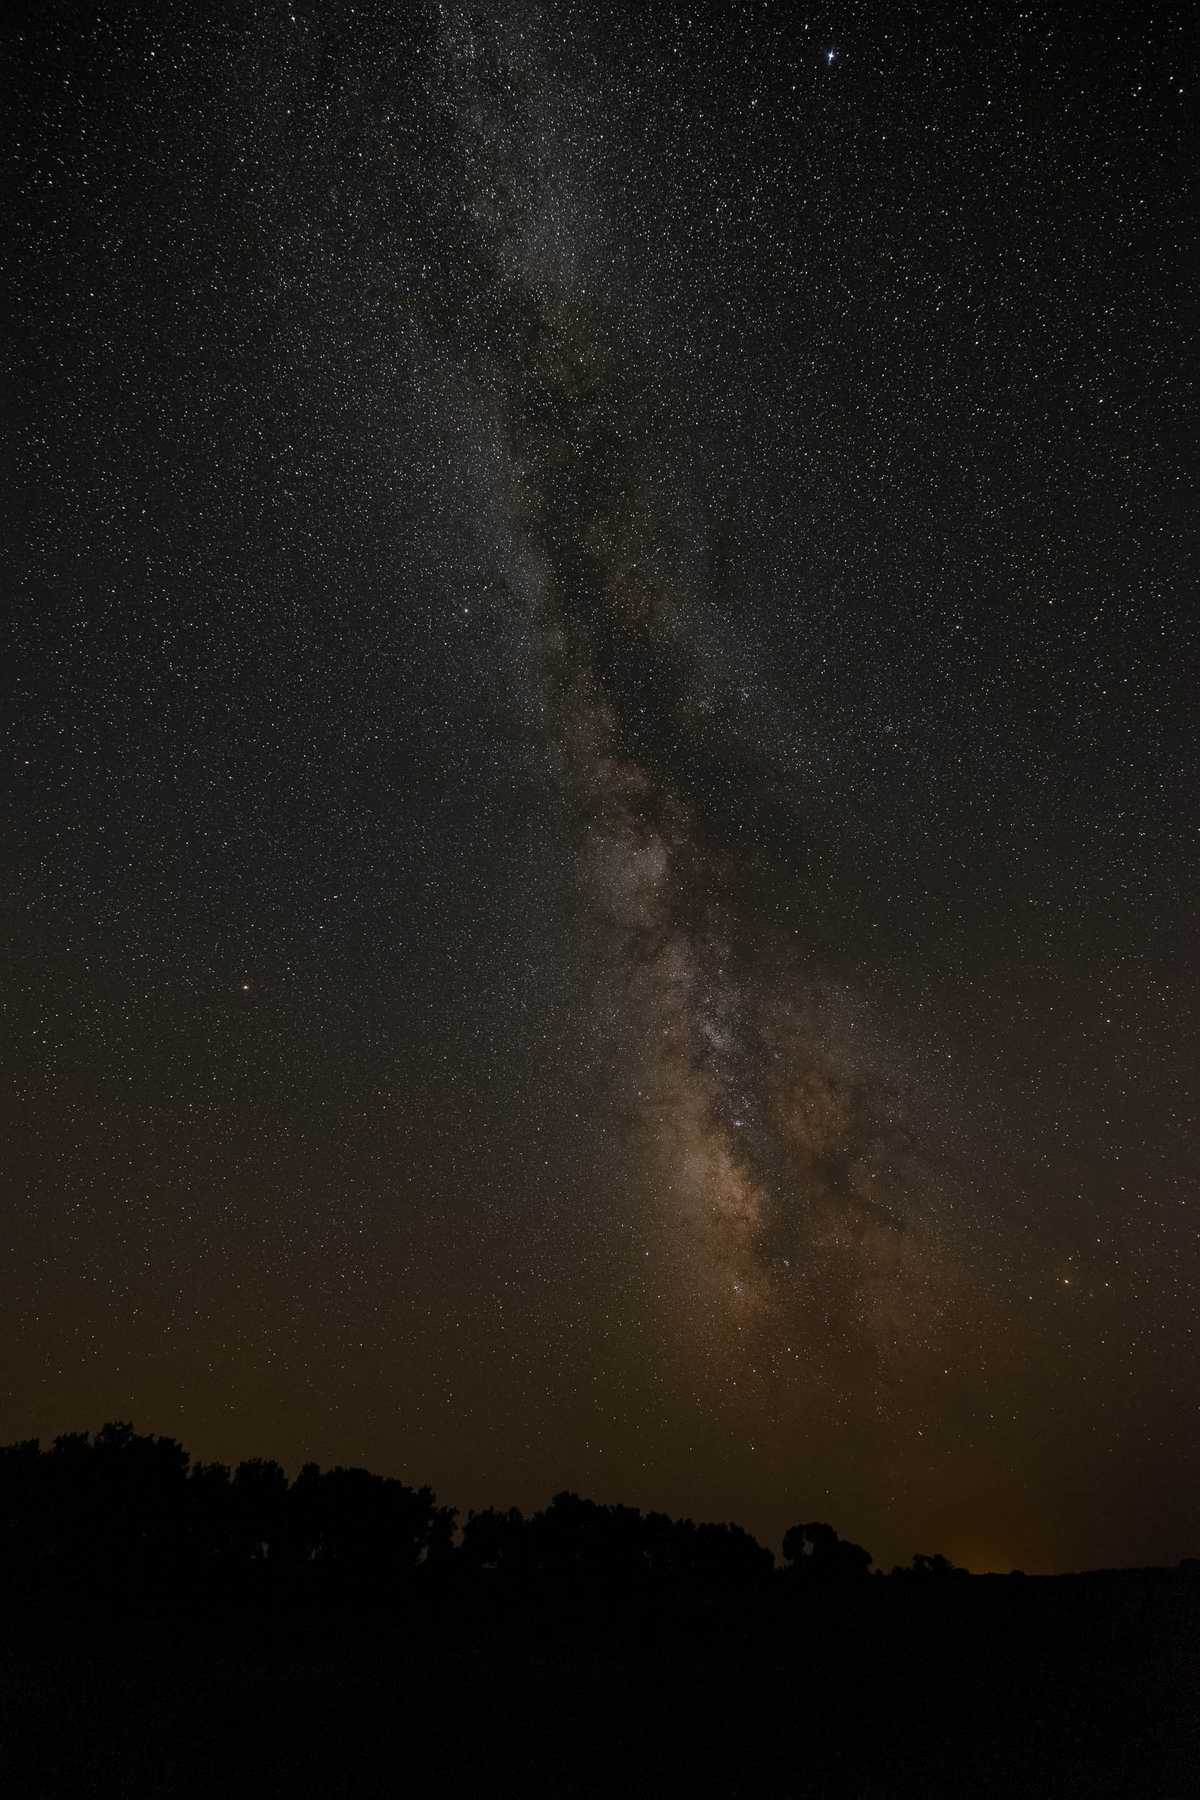 The Milky Way above the Oklahoma skyline